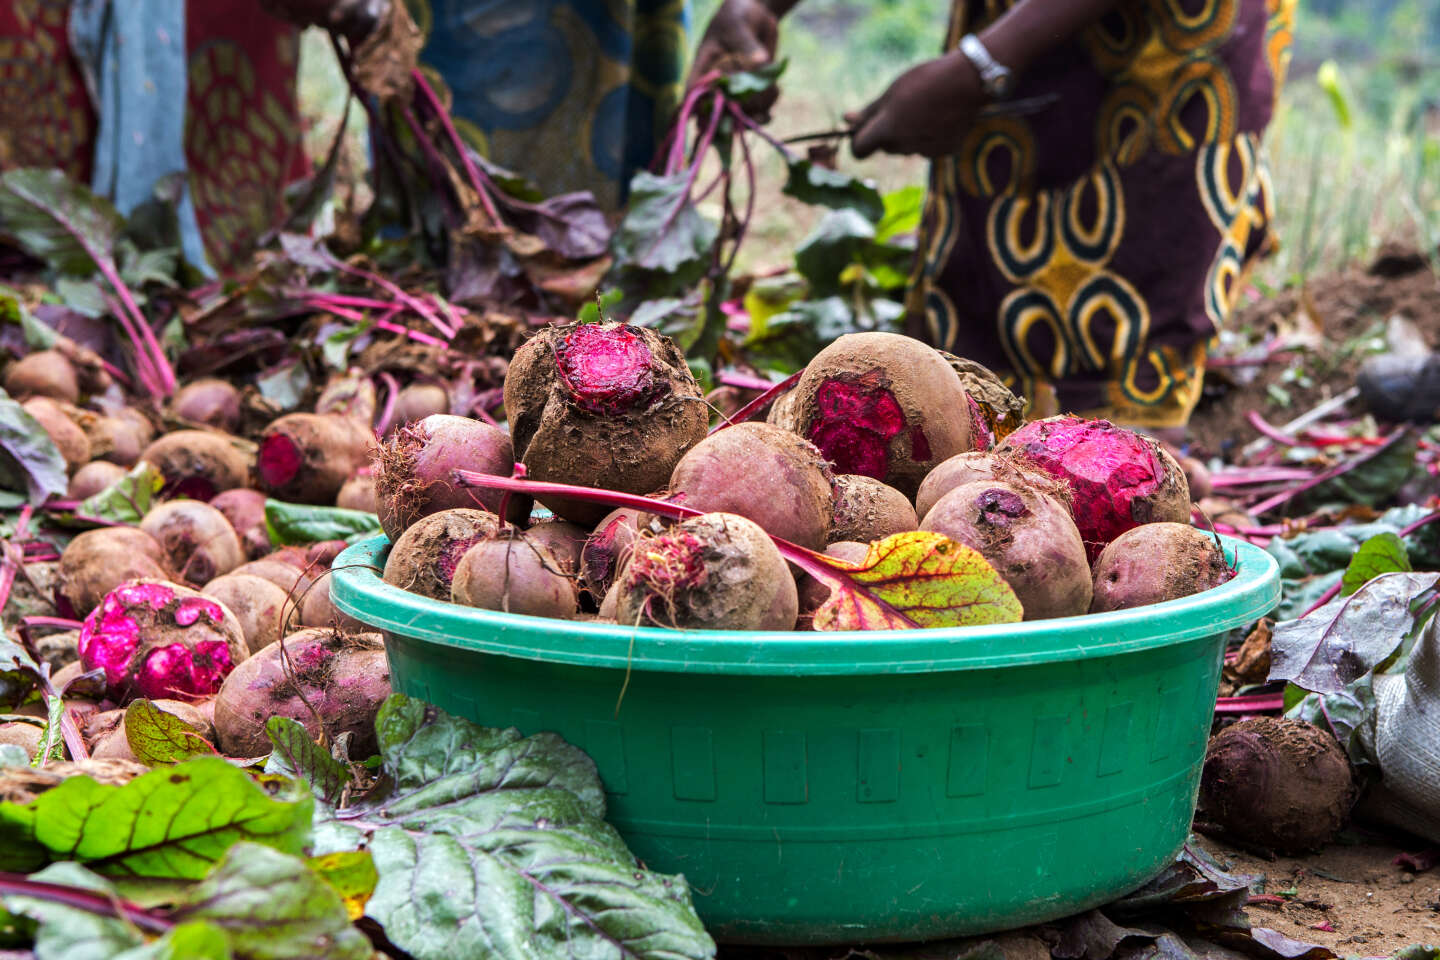 Rwandan farmers 'go against the grain of official policy'